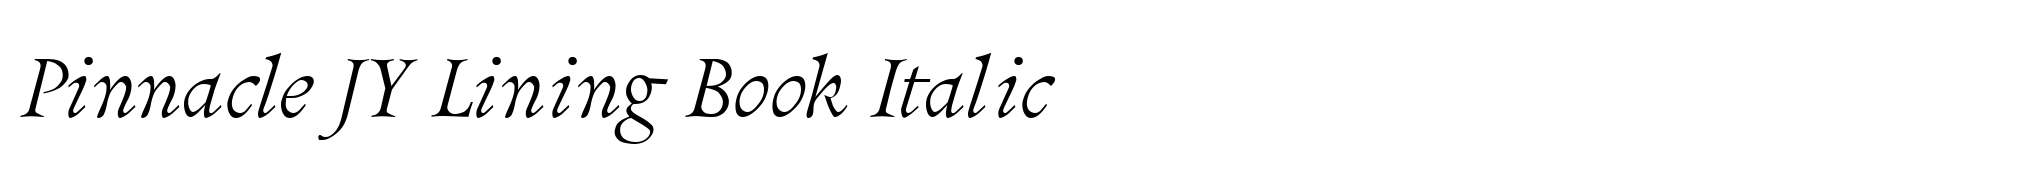 Pinnacle JY Lining Book Italic image